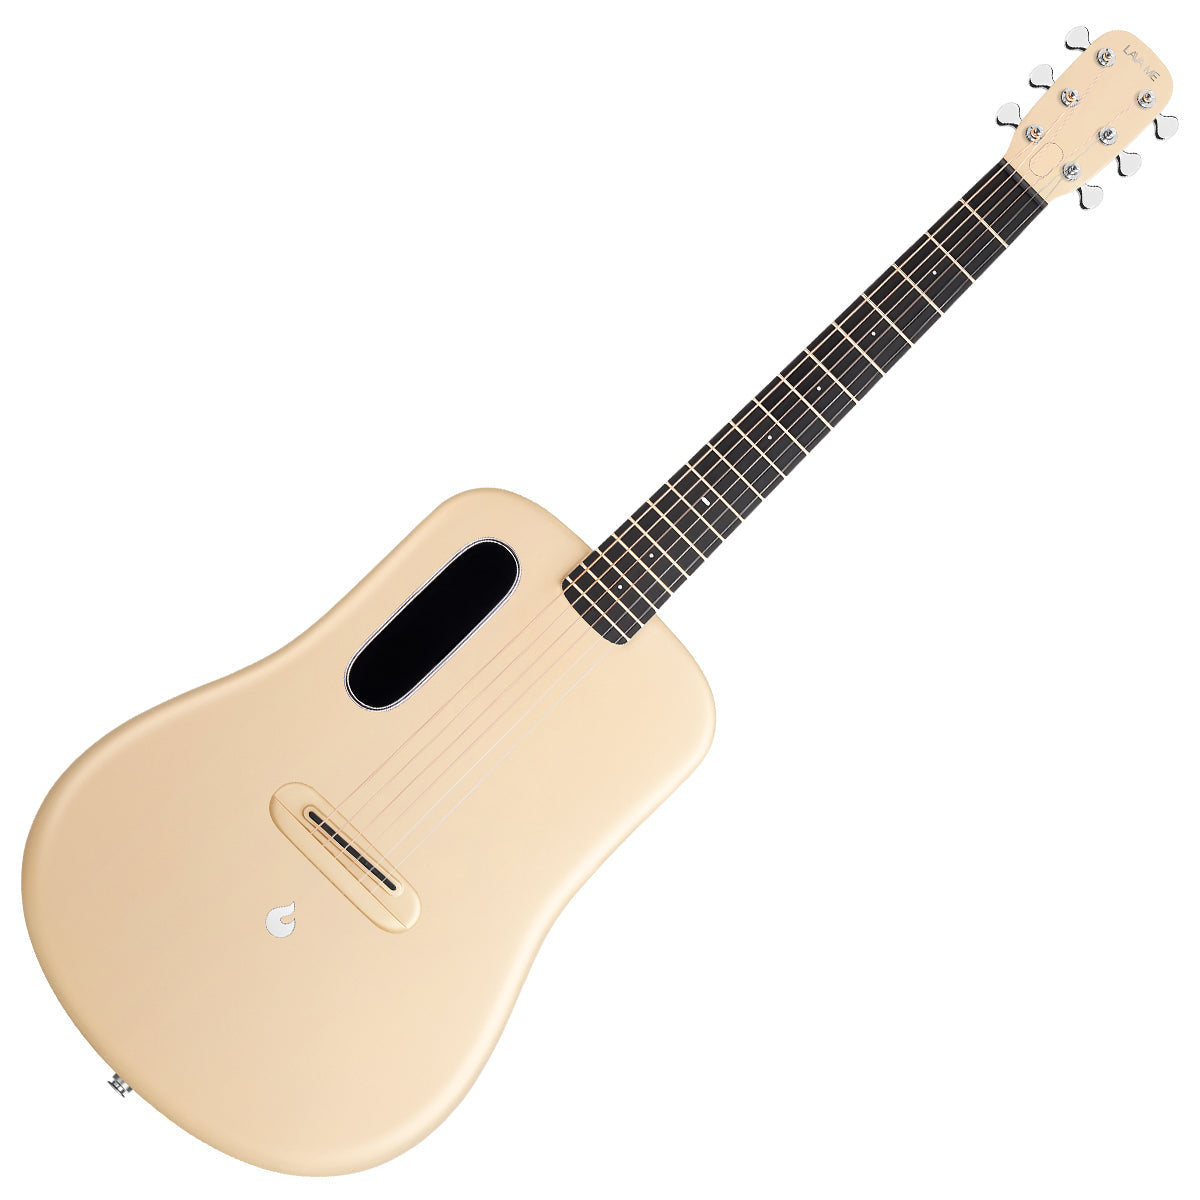 LAVA ME4 Carbon 38" with AirFlow Bag ~ Soft Gold, Acoustic Guitar for sale at Richards Guitars.